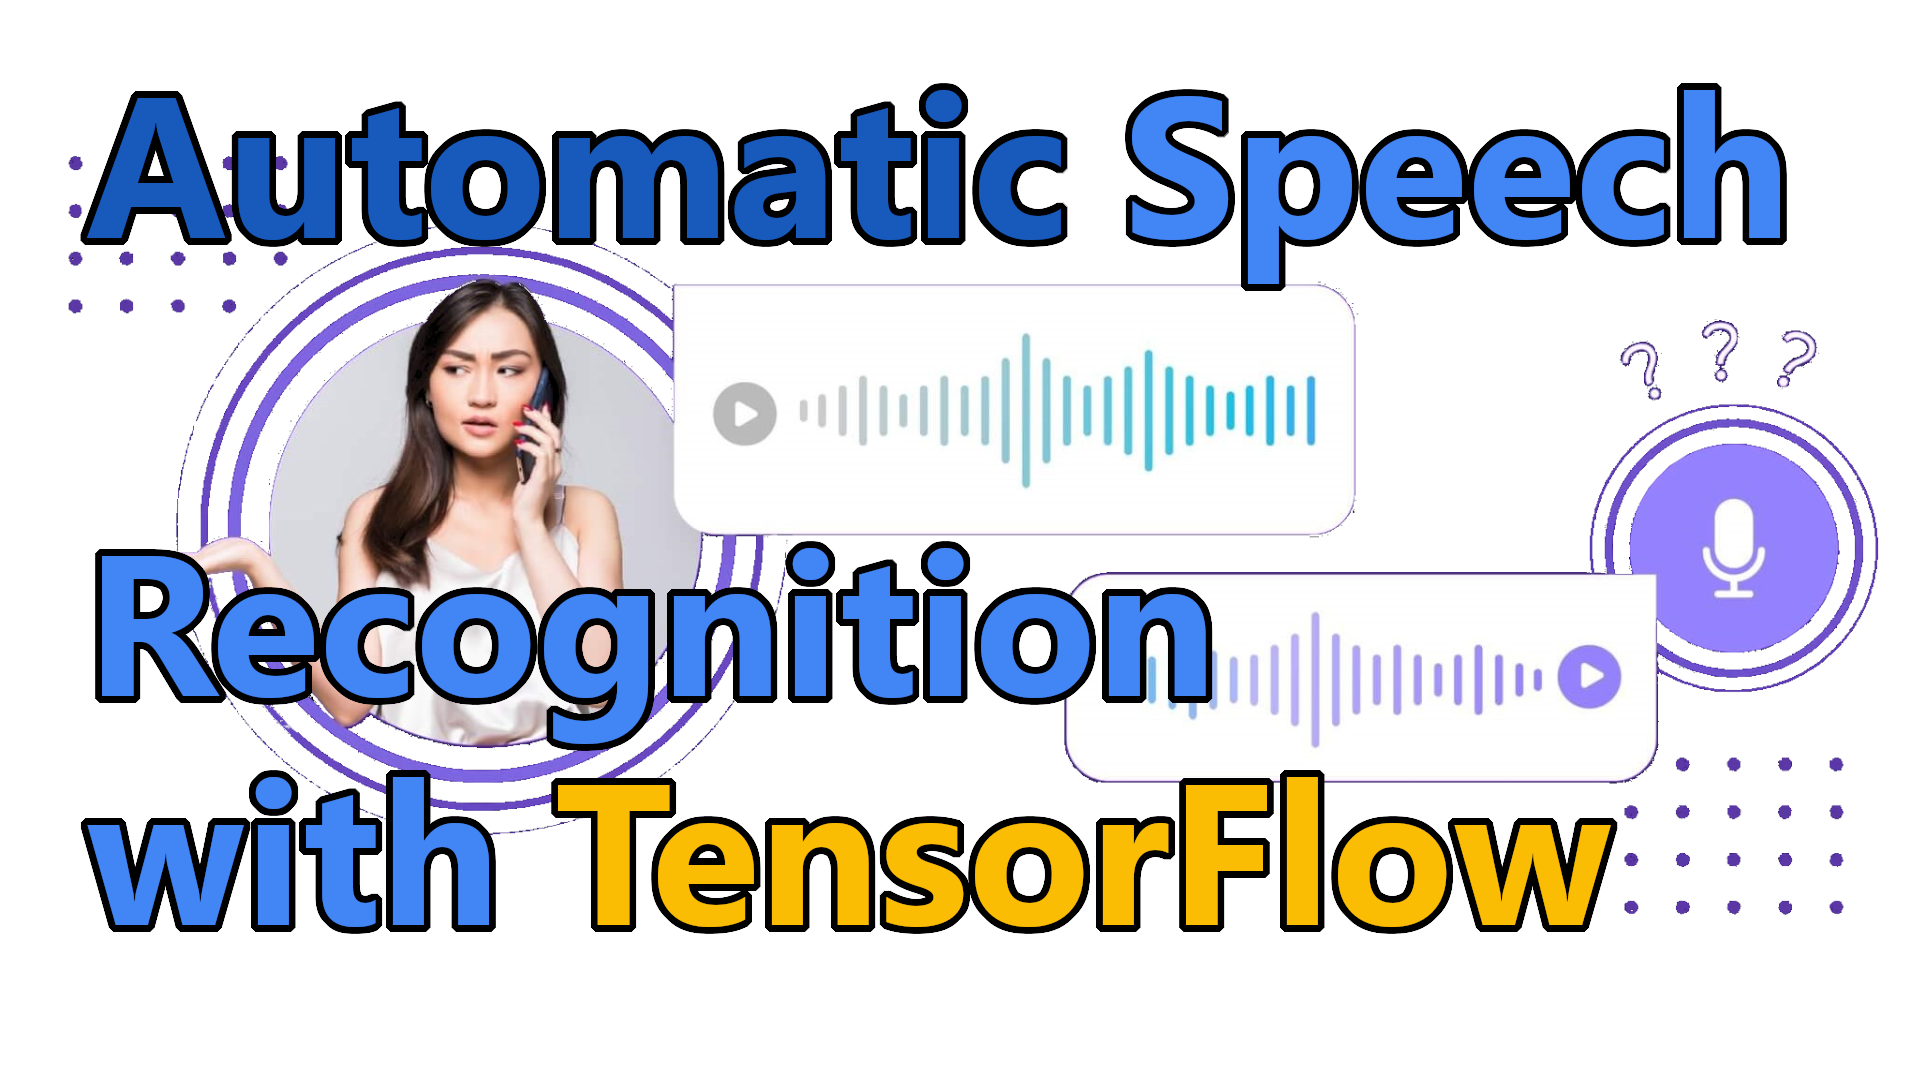 speech recognition sound definition